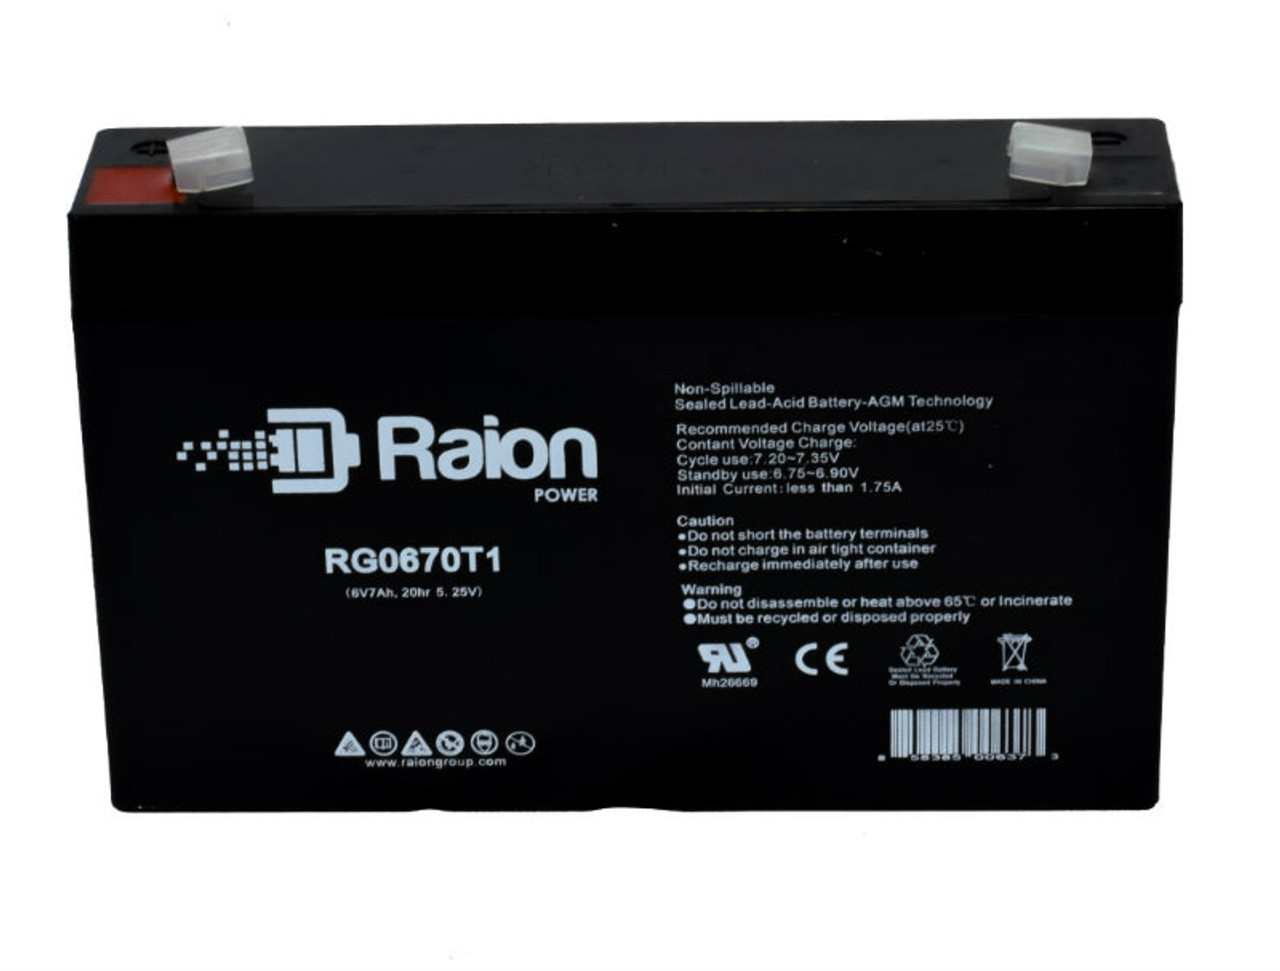 Raion Power RG0670T1 Replacement Battery Cartridge for Sonnenschein POWERWARE PERSONAL